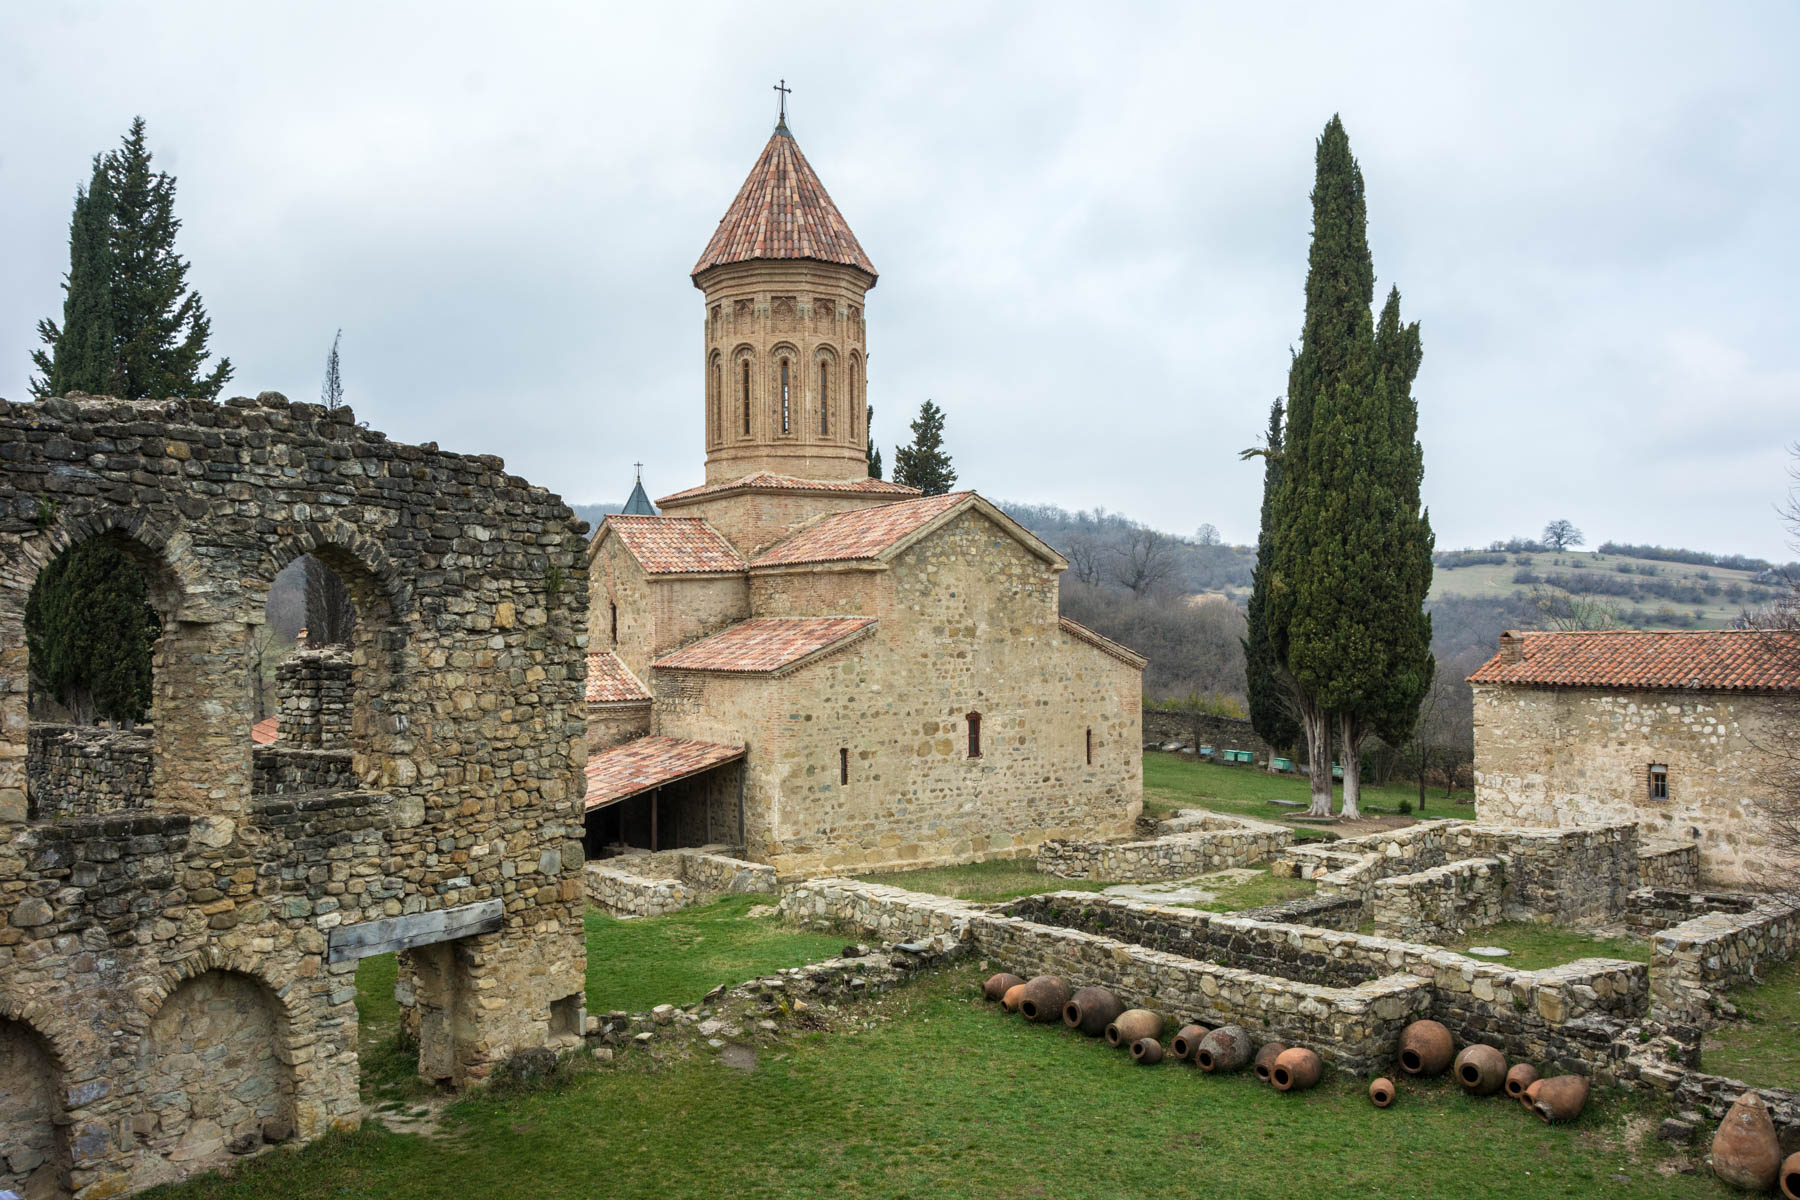 Ikalto monastery in the Kakheti region of Georgia